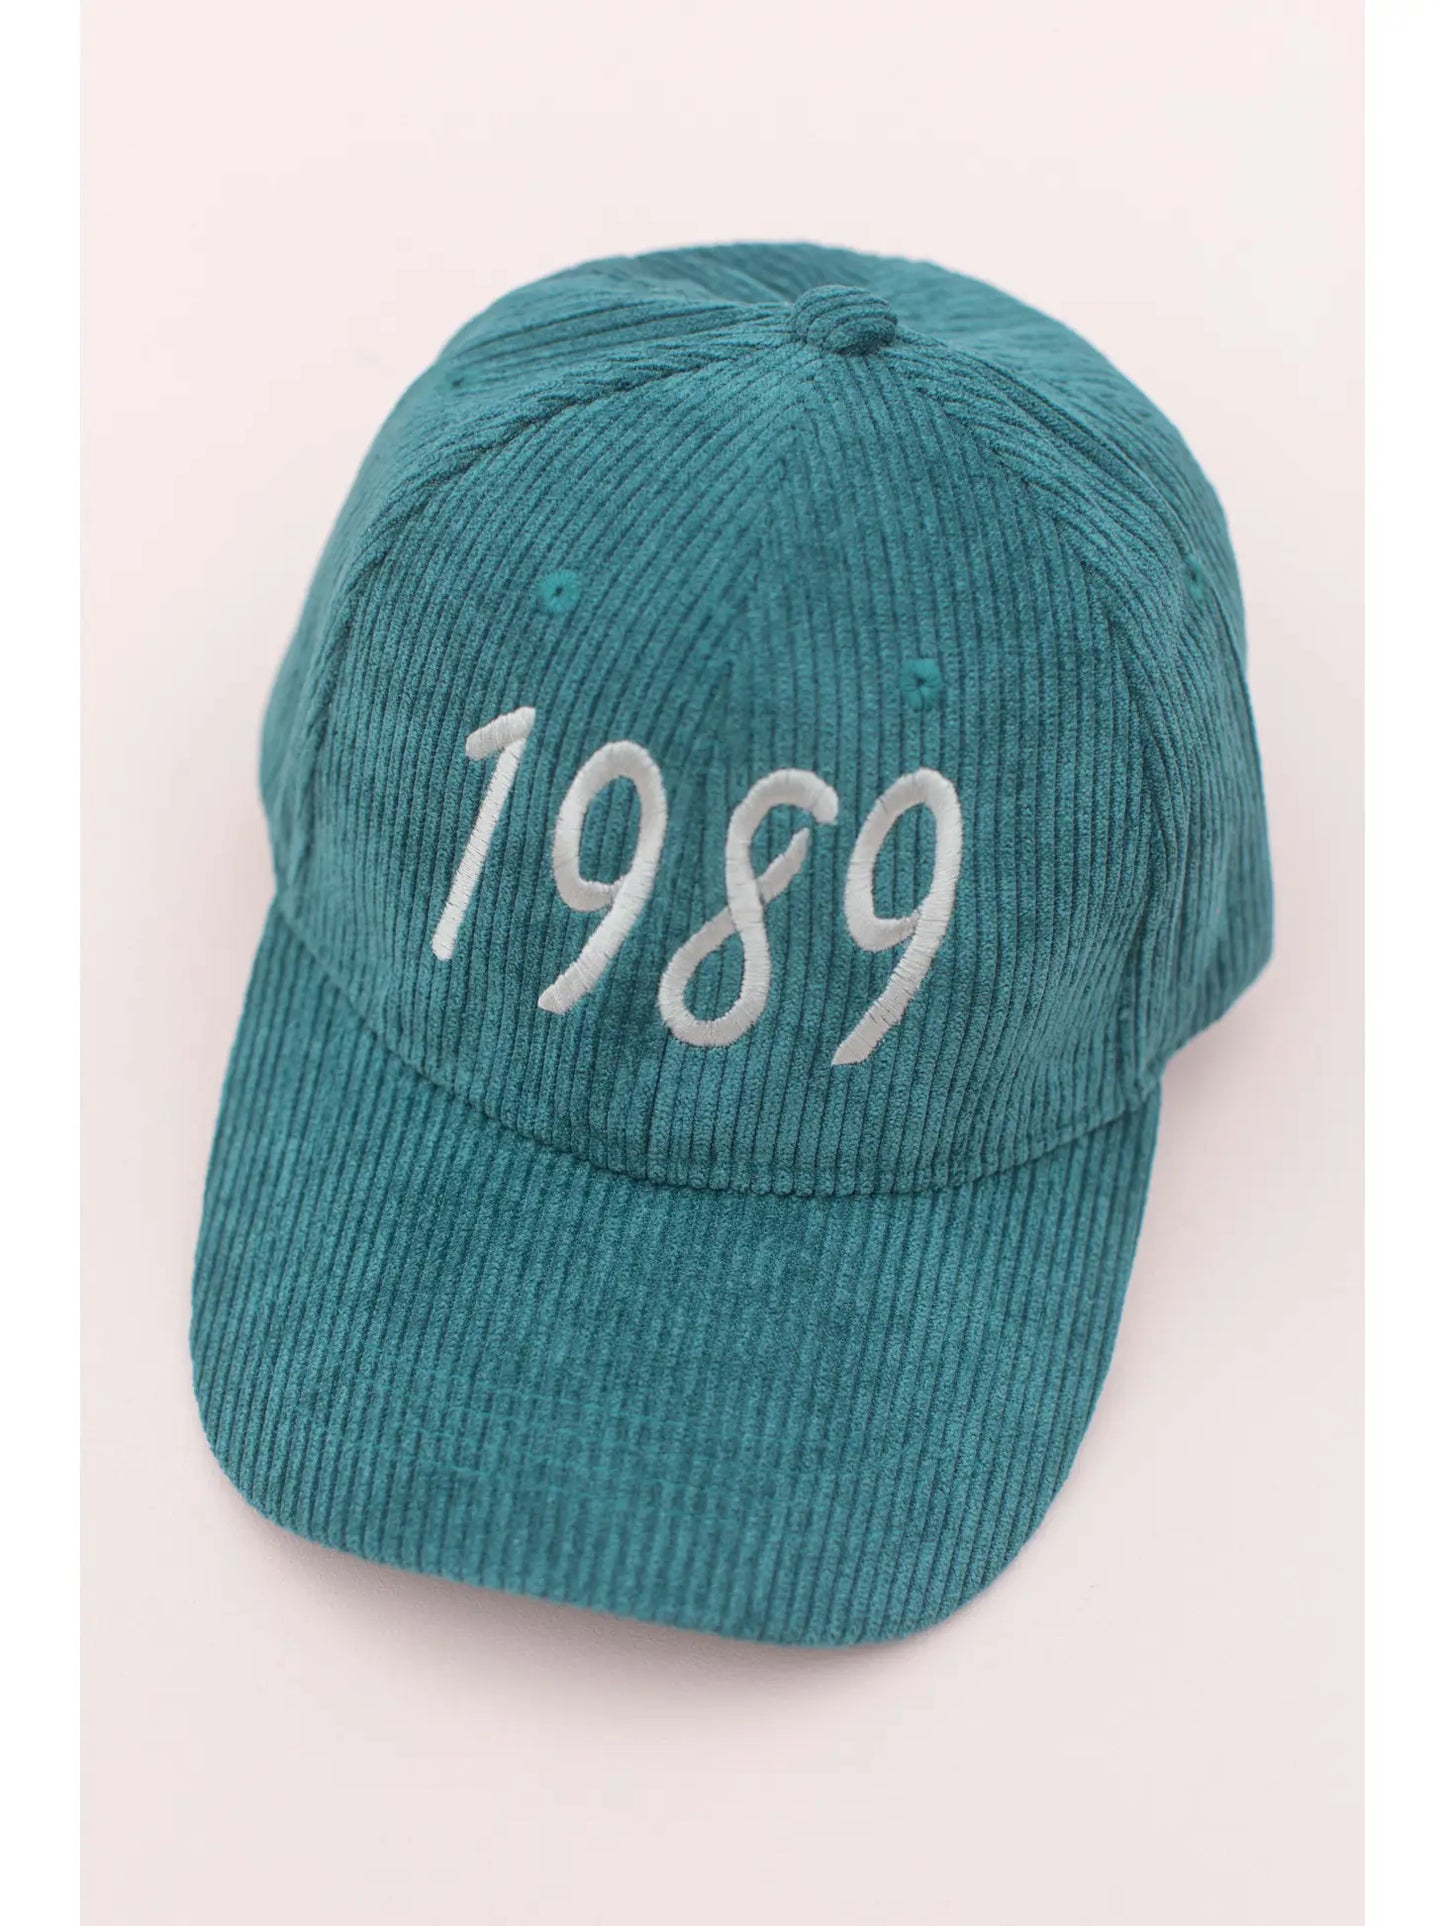 "1989" Embroidery Corduroy Hat Cap